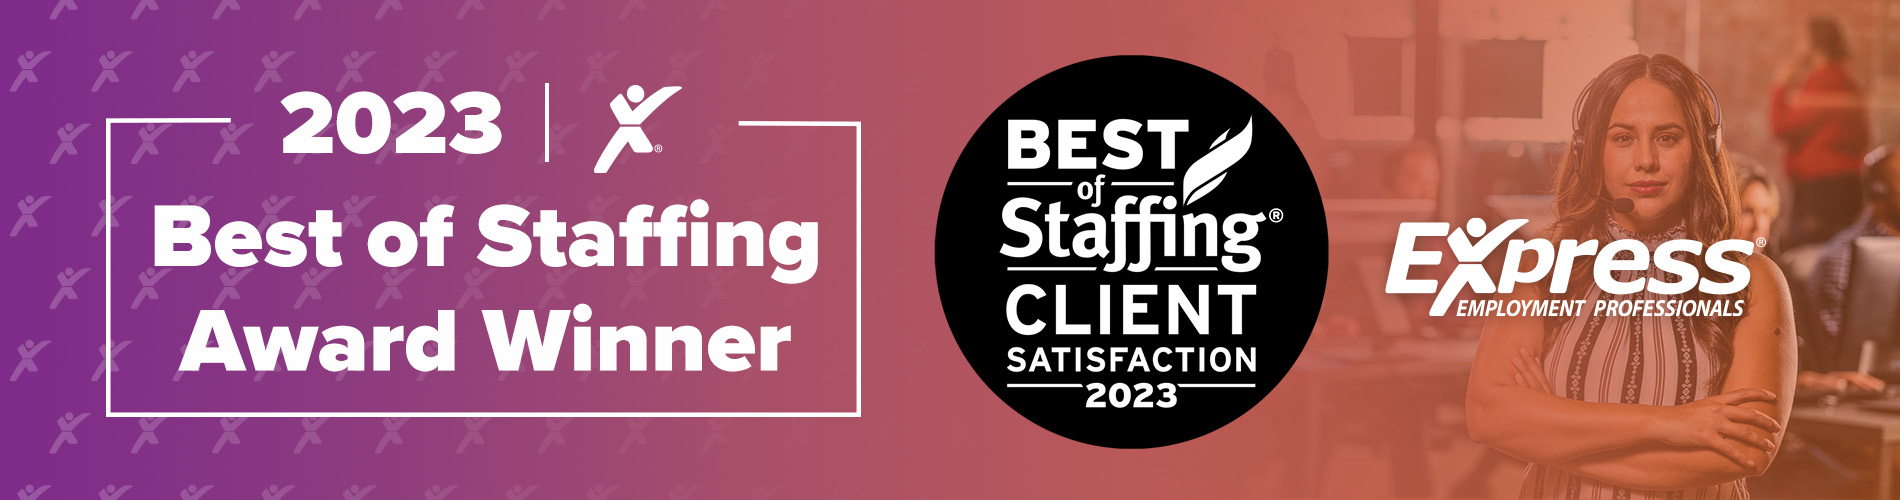 Best-of-Staffing-Client-Award-Banner-2023